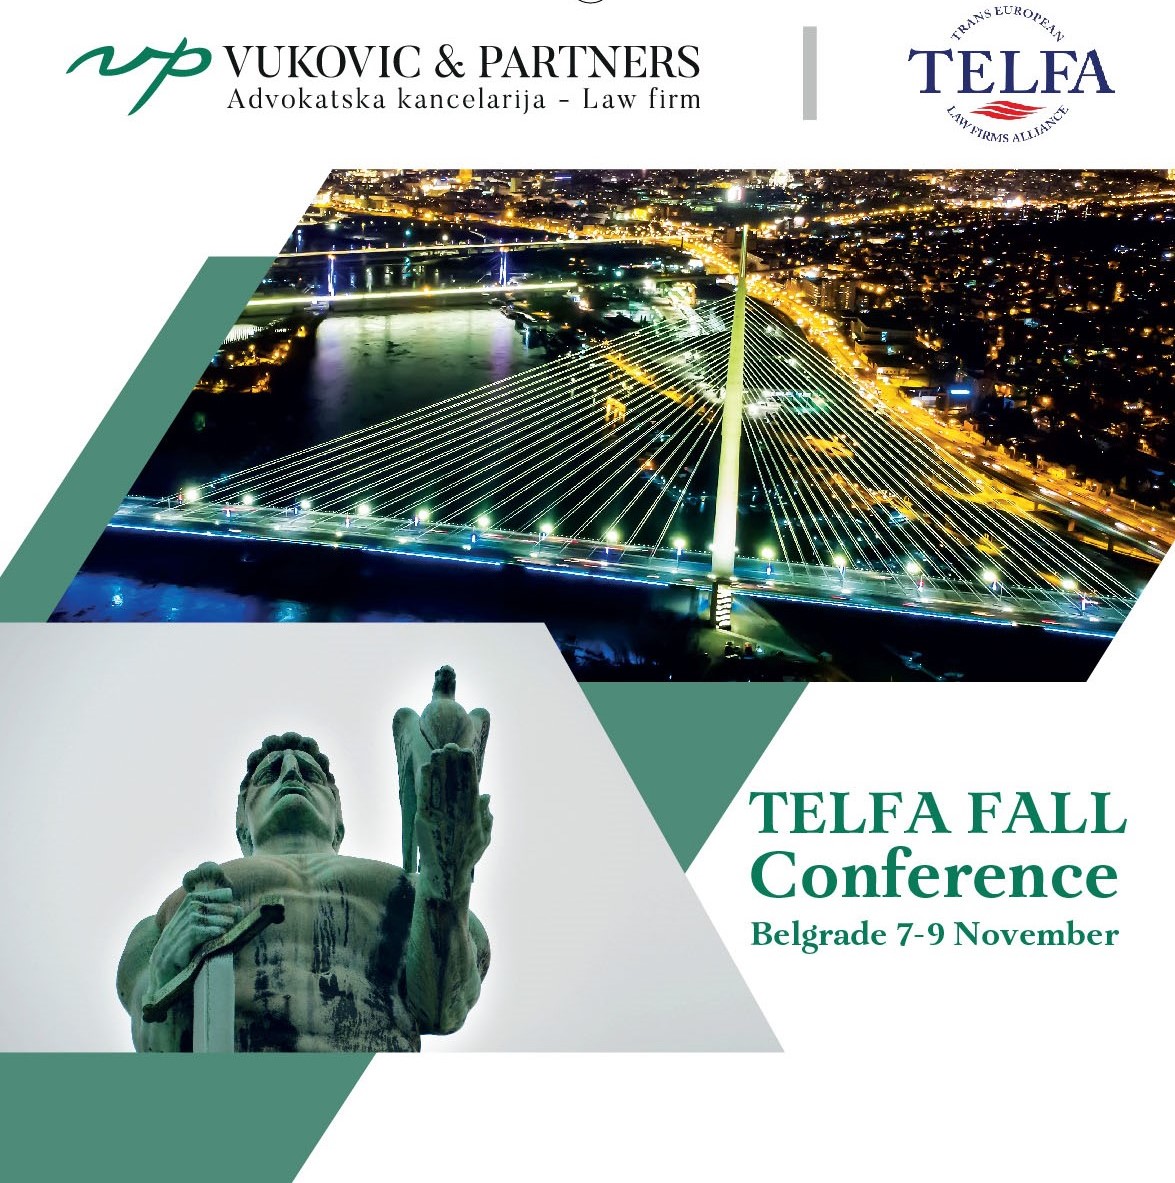 Telfa fall conference held in Belgrade